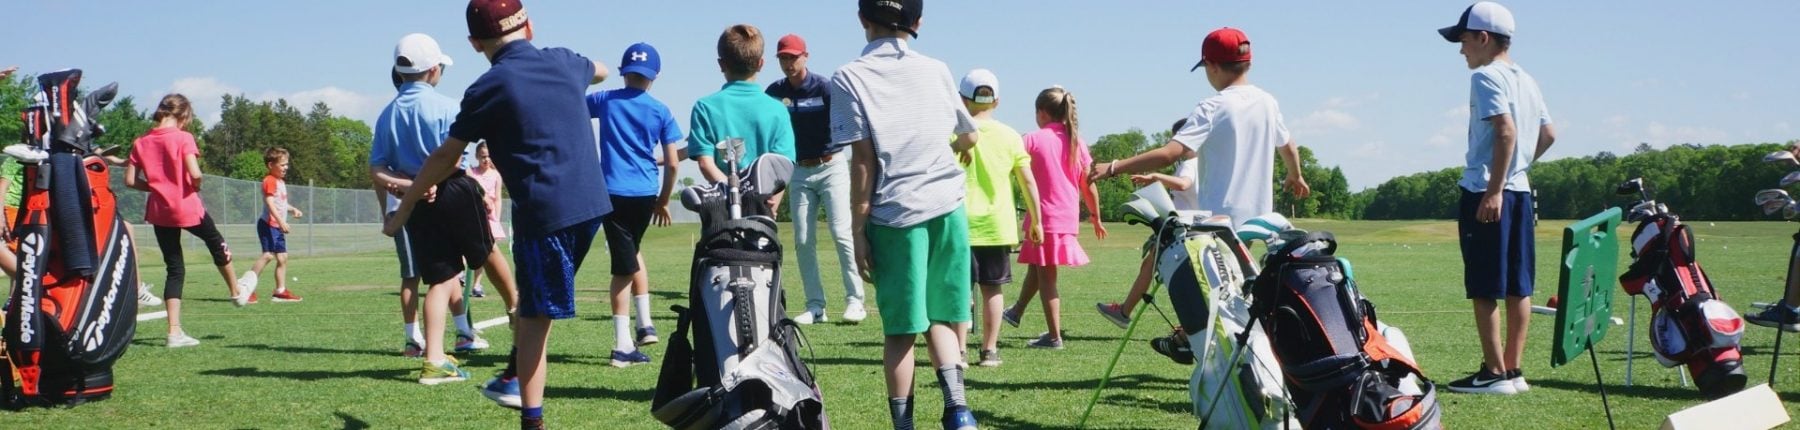 Junior golfers at golf camp at Madden's on Gull Lake